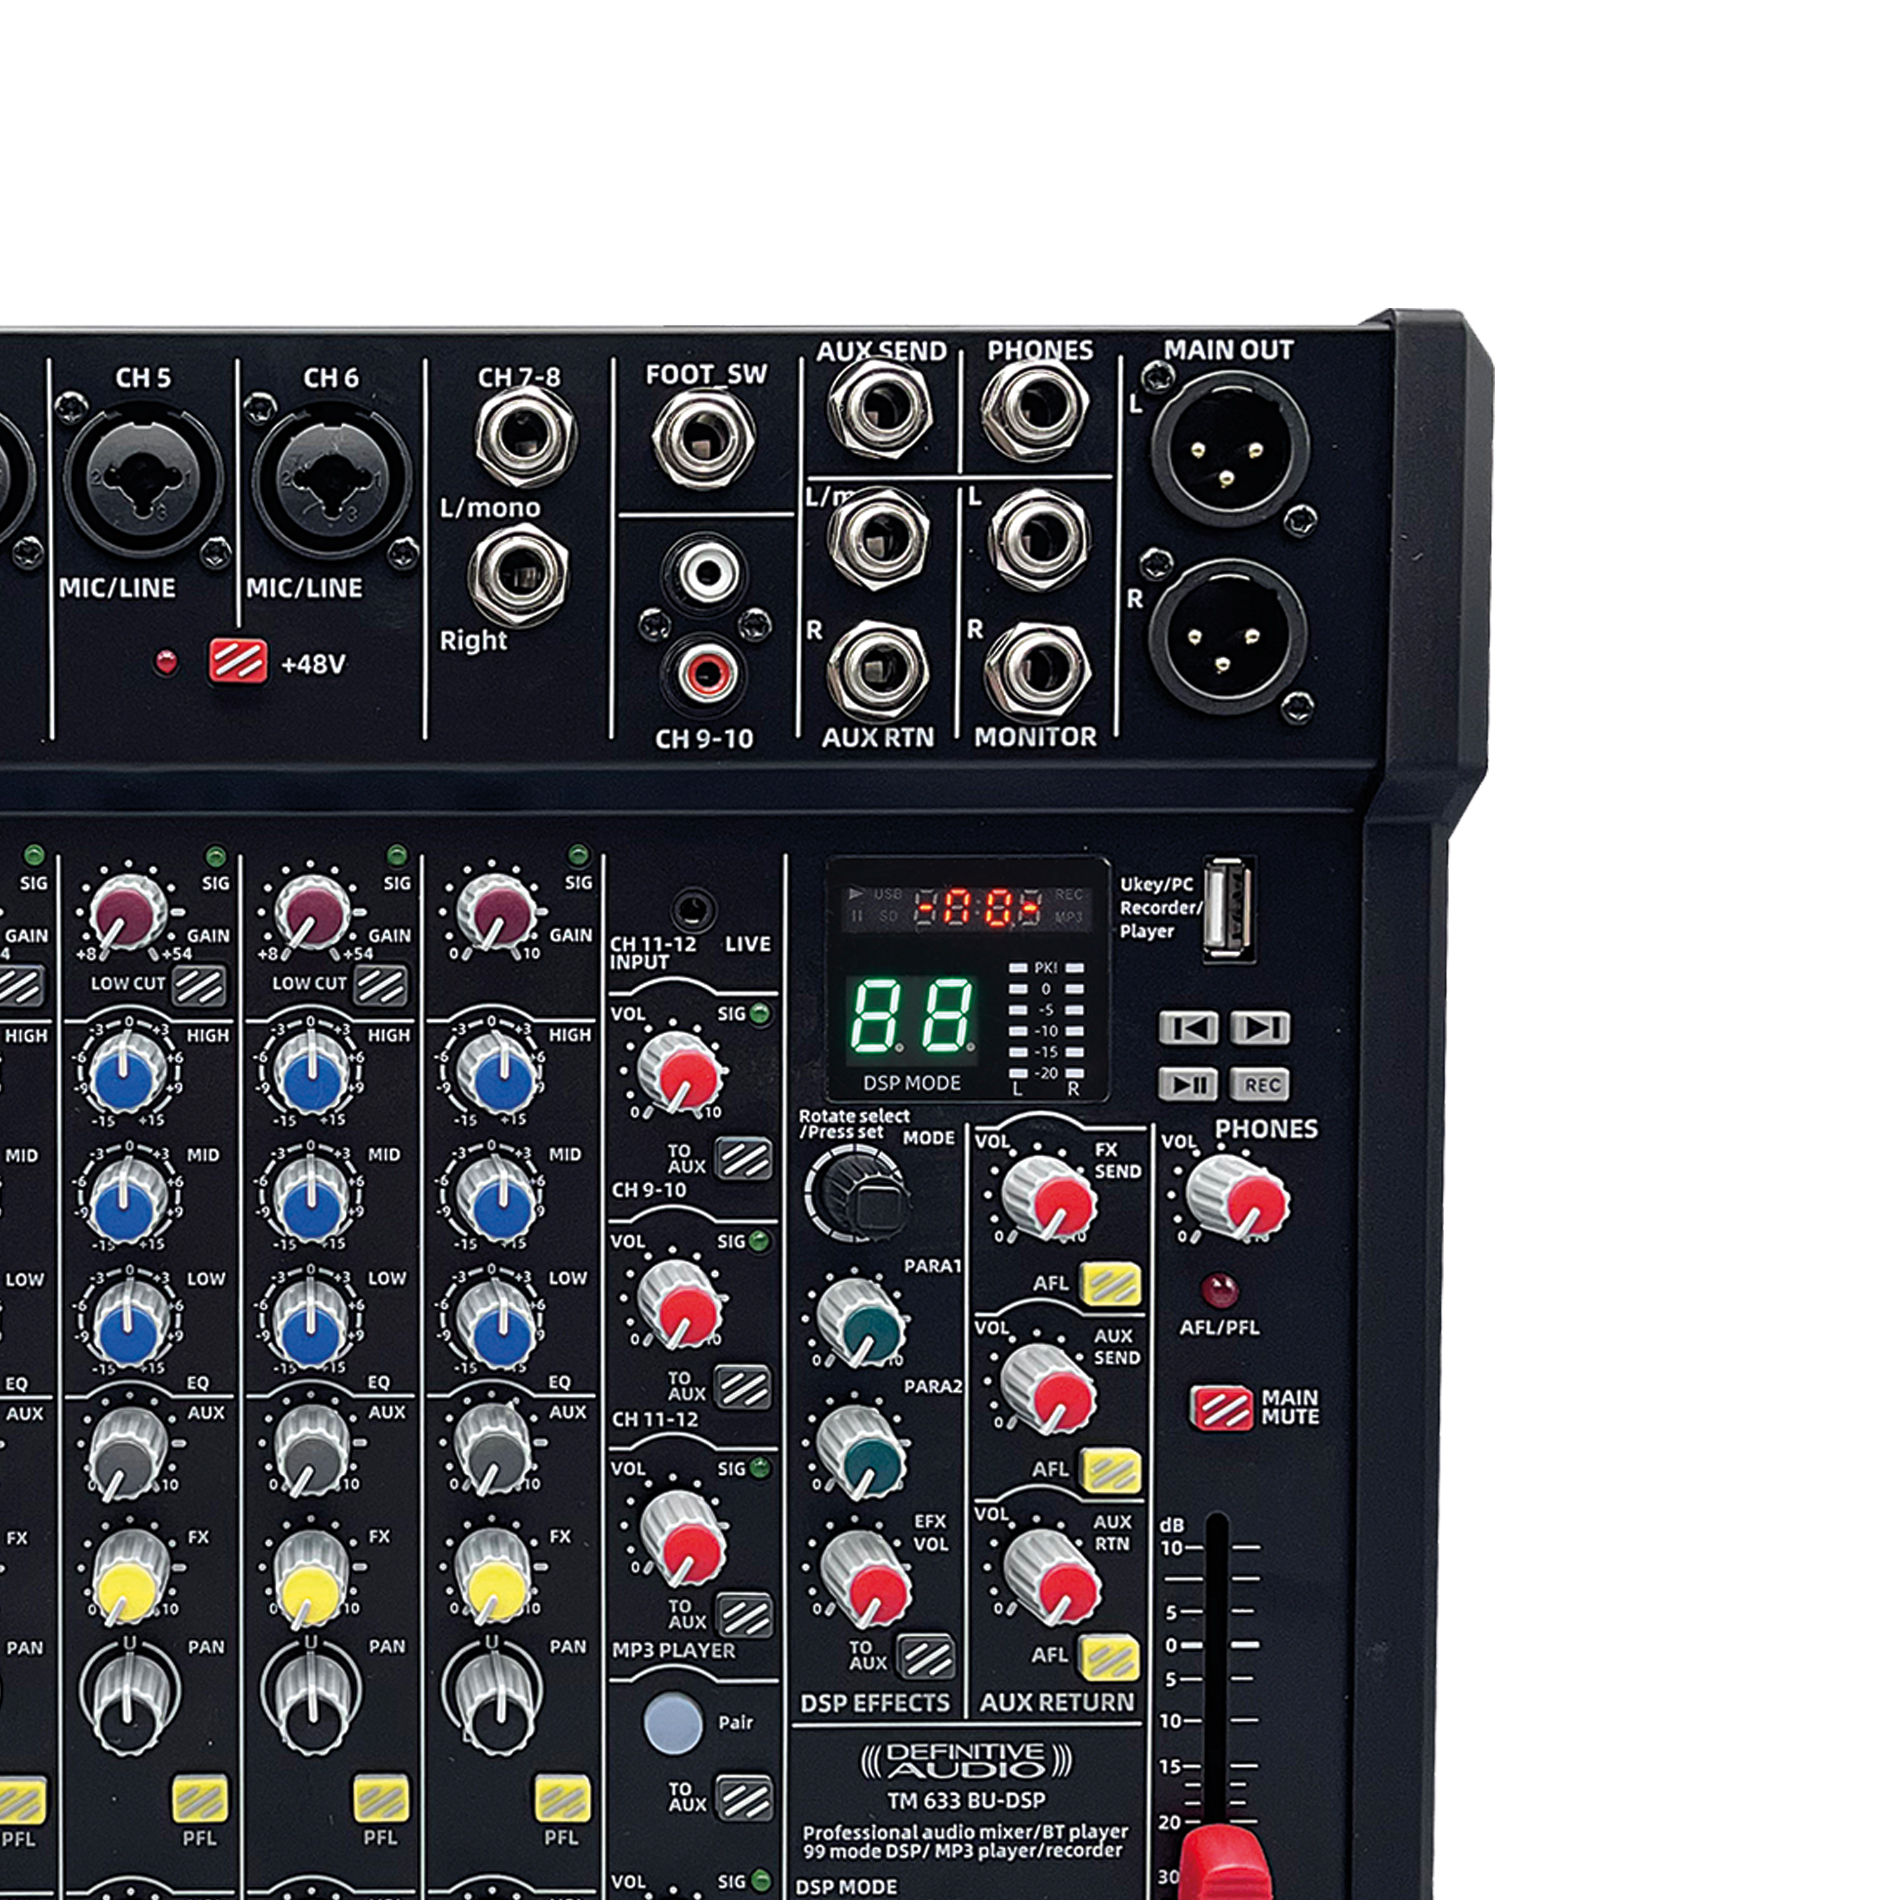 Definitive Audio Tm 633 Bu-dsp - Analog mixing desk - Variation 6